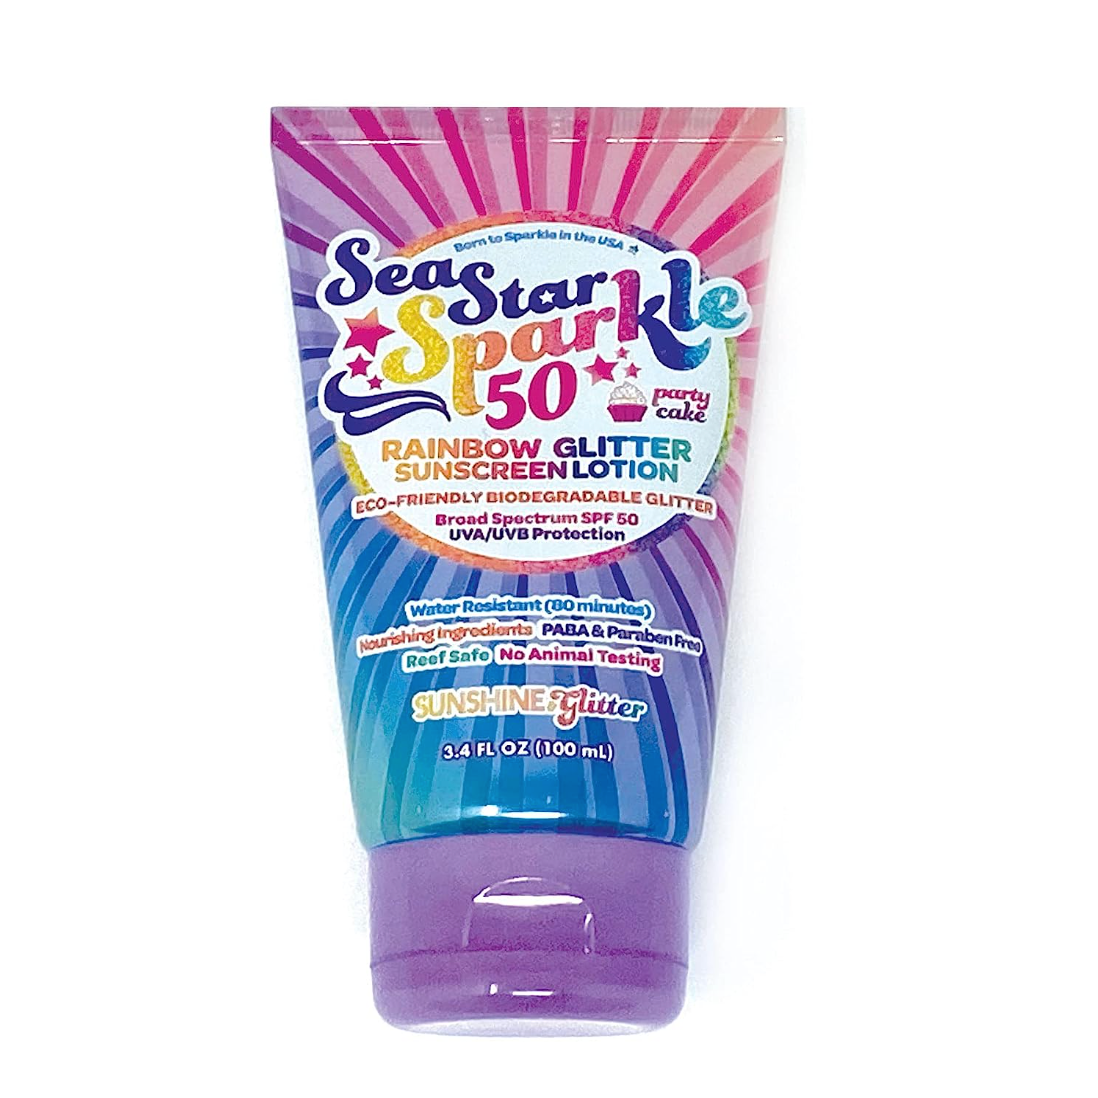 sea star sparkle SPF 50 sunscreen | party cake